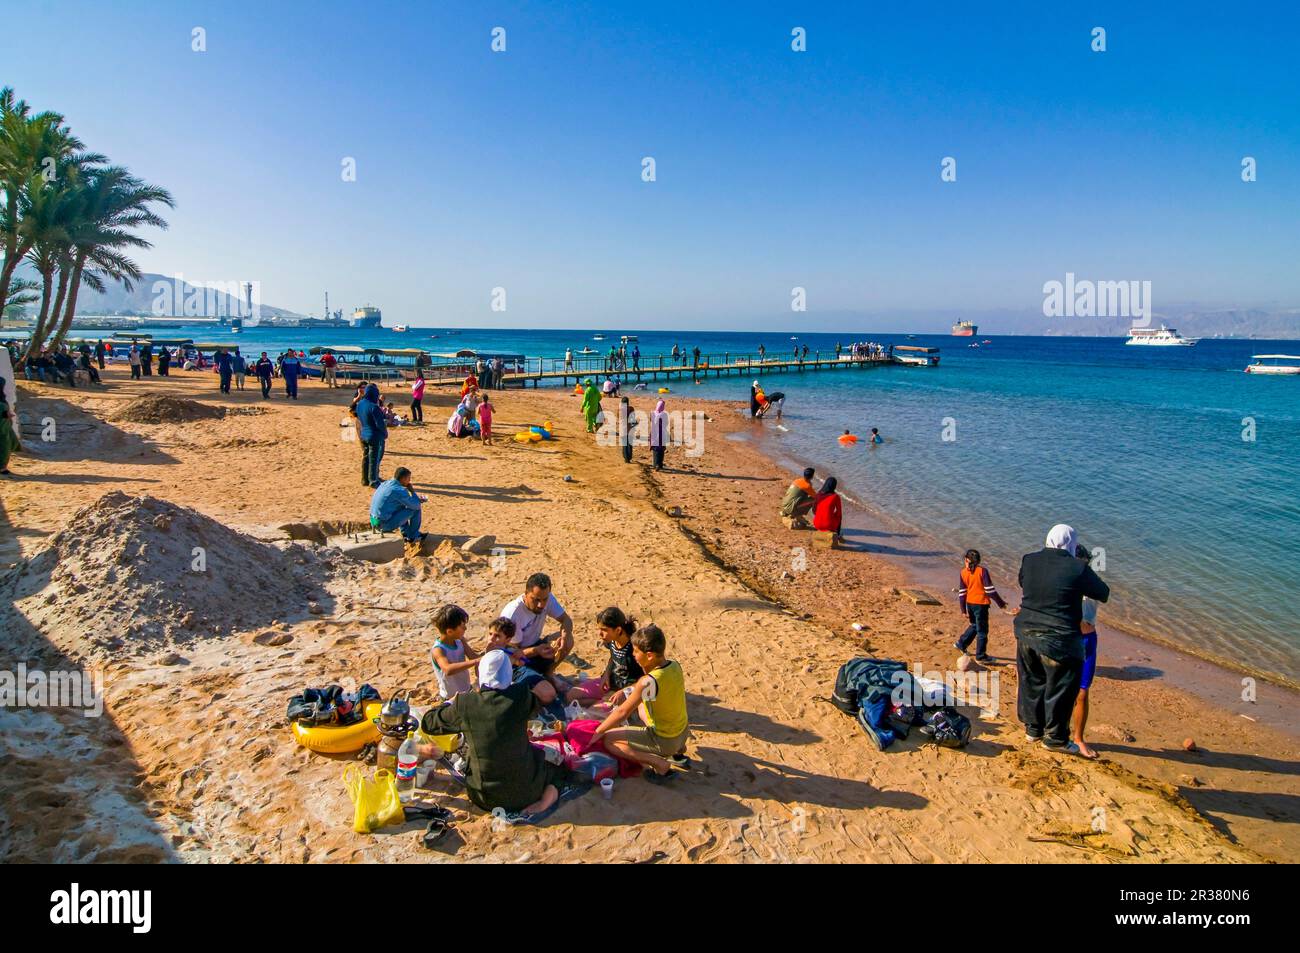 Bay at Aqaba with sand beach, Jordan Stock Photo